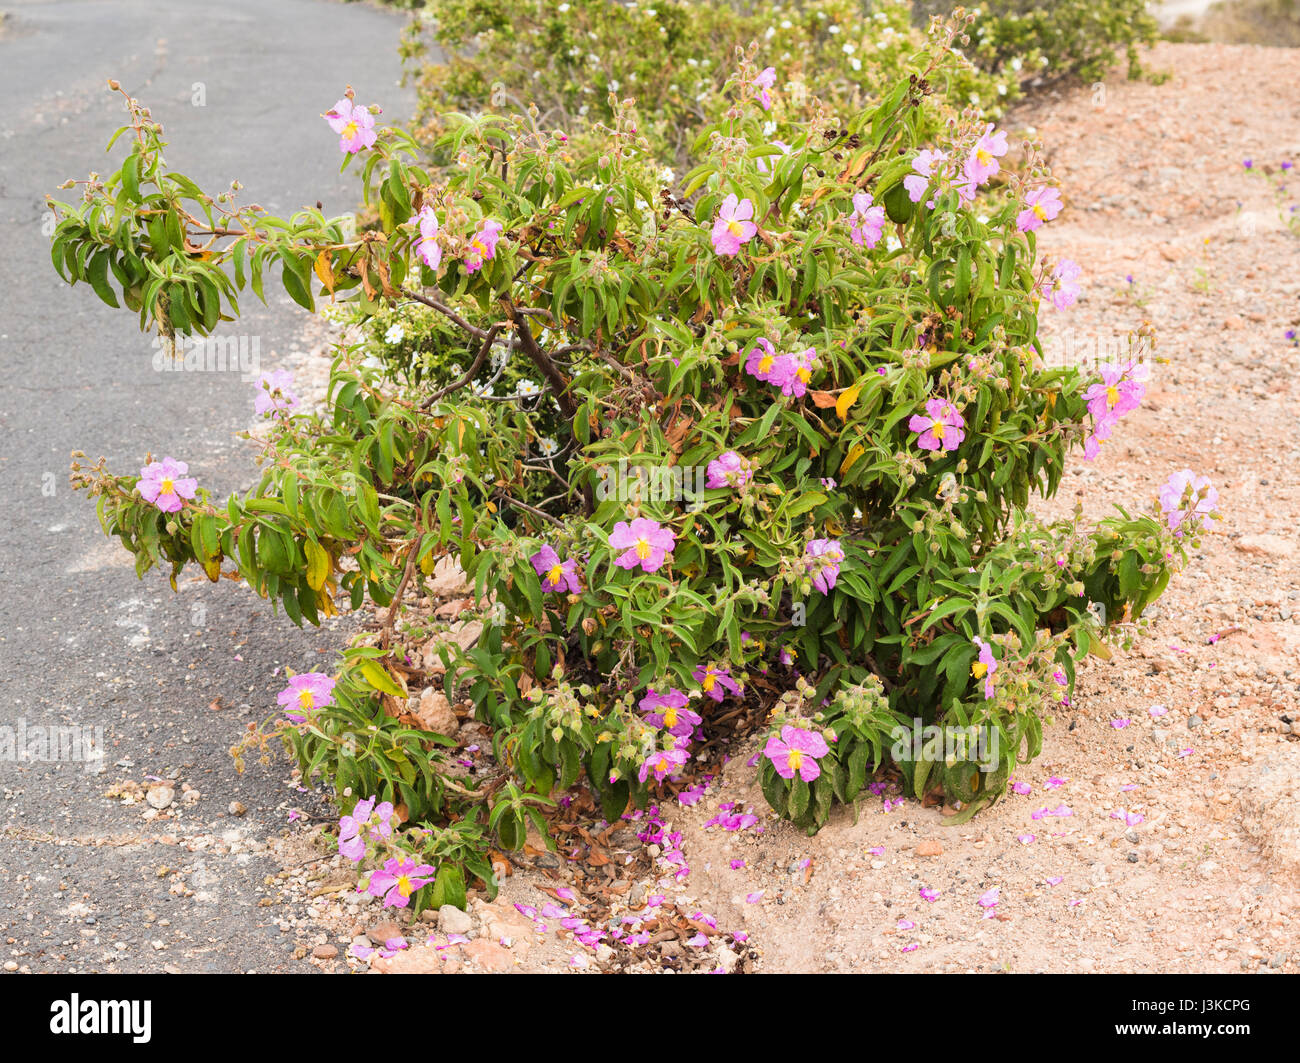 Cistus symphytifolius (amargante de pinar, pine forest cistus, rockrose), a Canarian endemic, flowering in spring on roadside near Ifonche, Tenerife Stock Photo